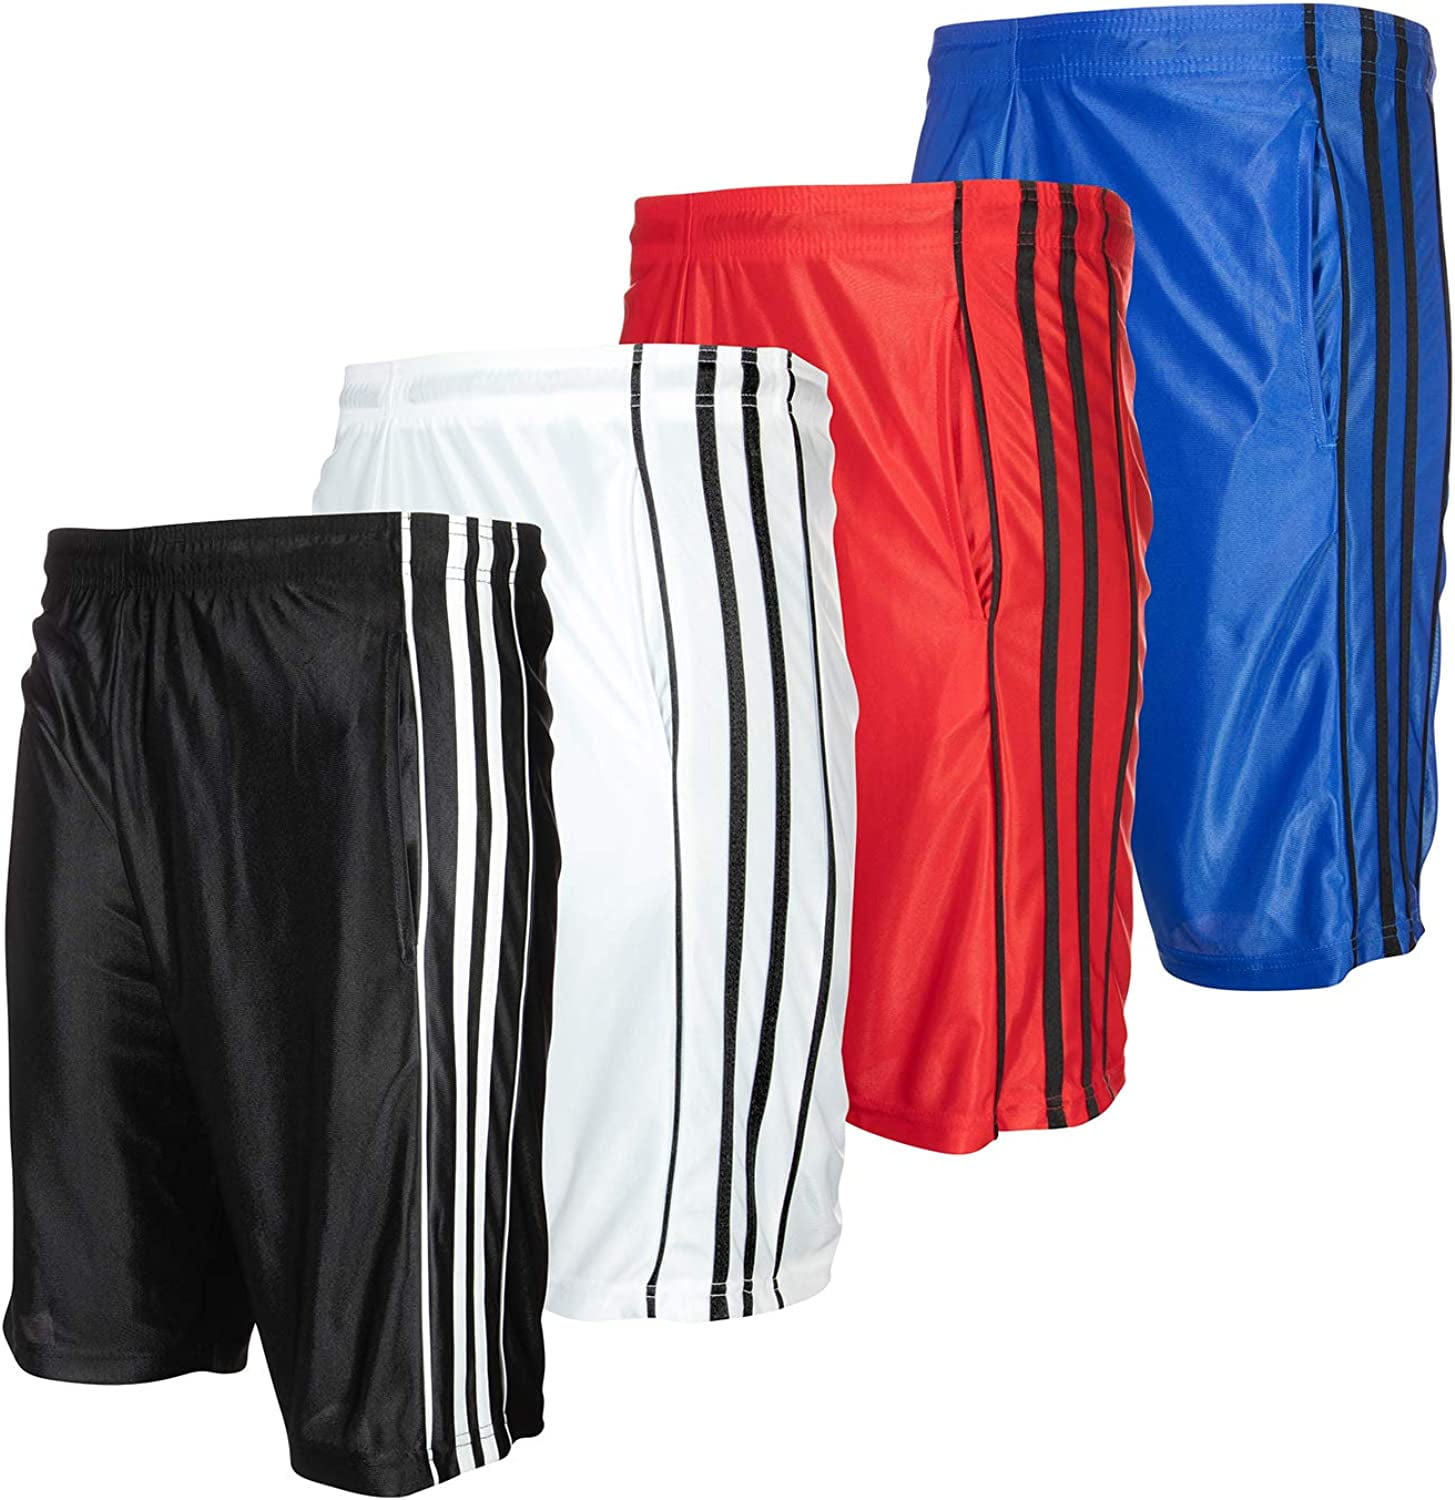 High Energy Men's Long Basketball Shorts - 4 Pack Knee Length Athletic ...